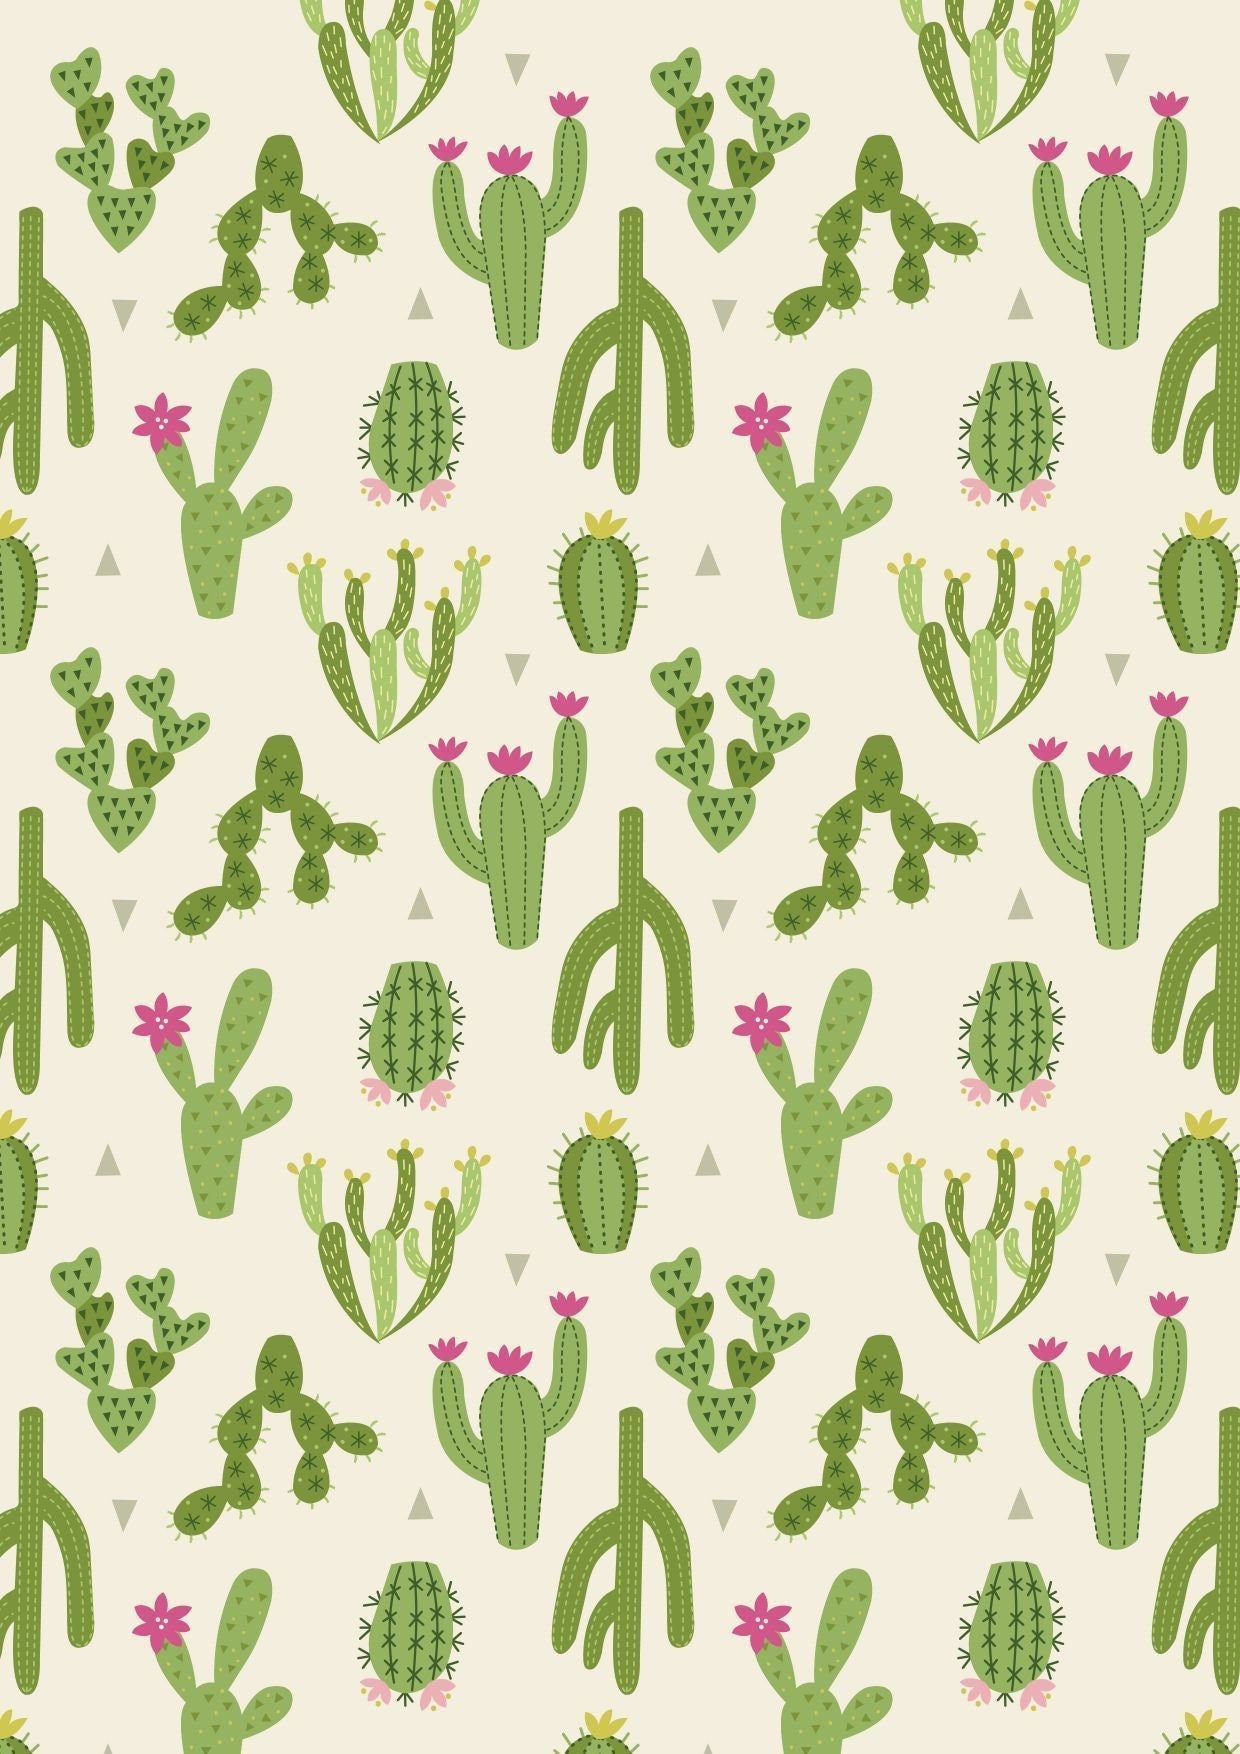 J001 Green Cactus Cotton Spandex Jersey Knit